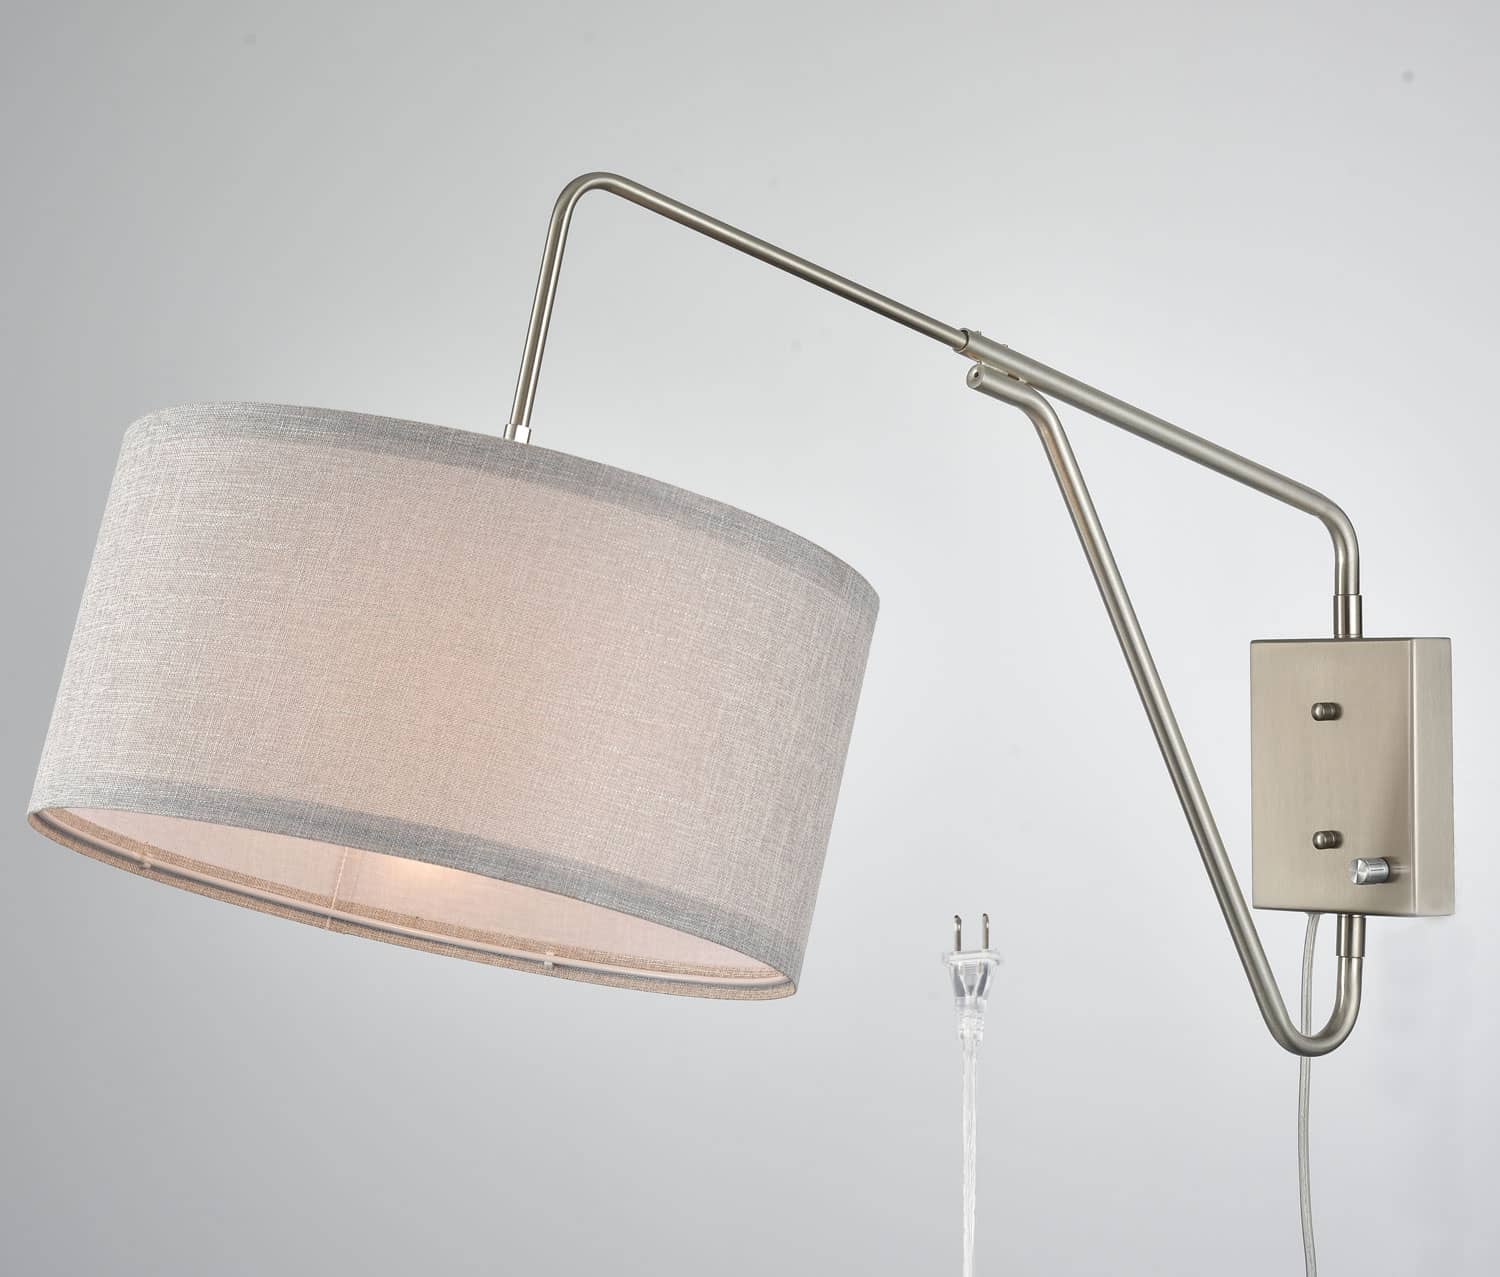 Mid-Century Fabric Plug-in Wall Light Swing Arm Wall Lamp